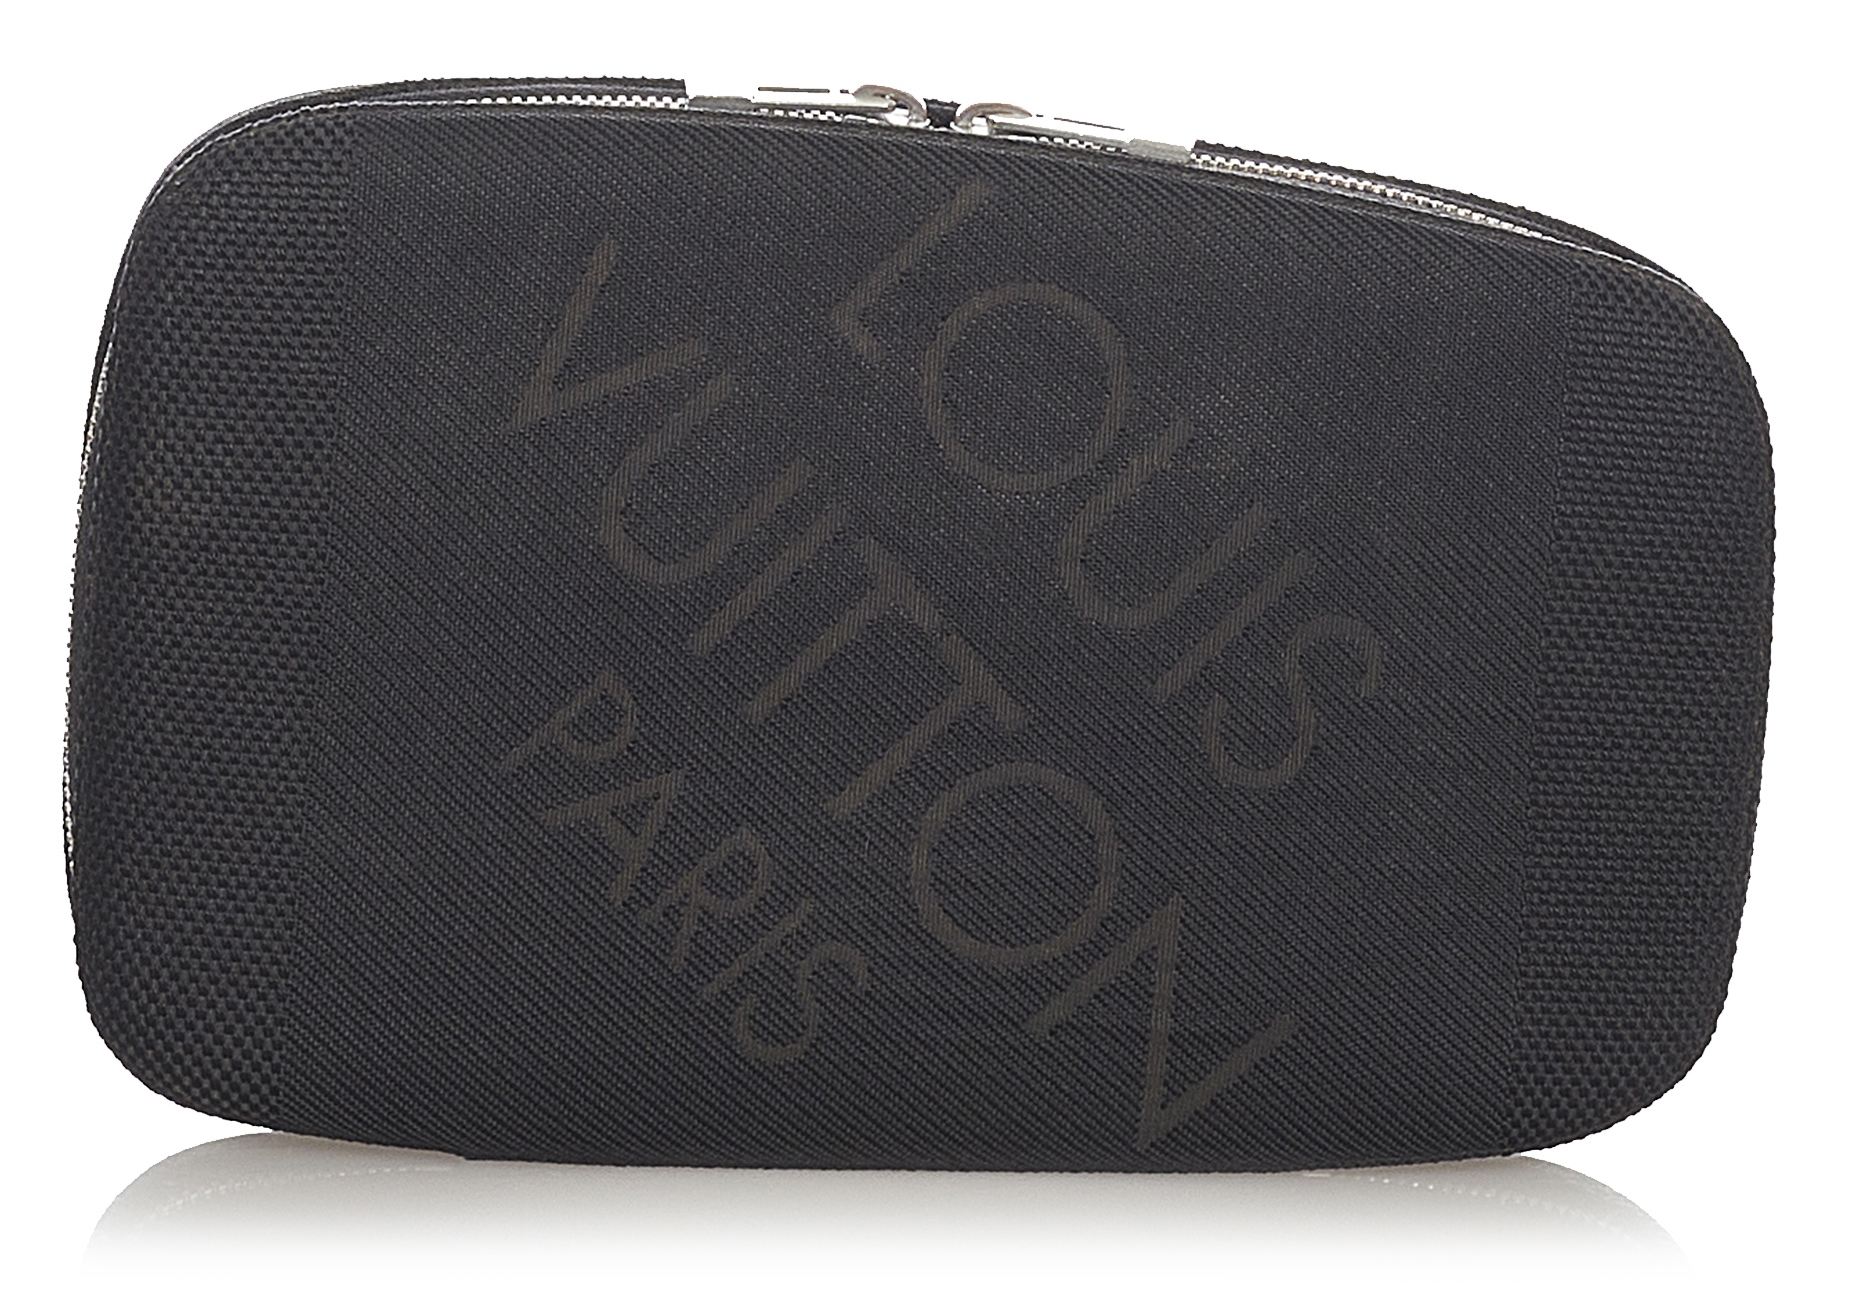 Louis Vuitton Blue Logo Embossed Tie - Vintage Lux